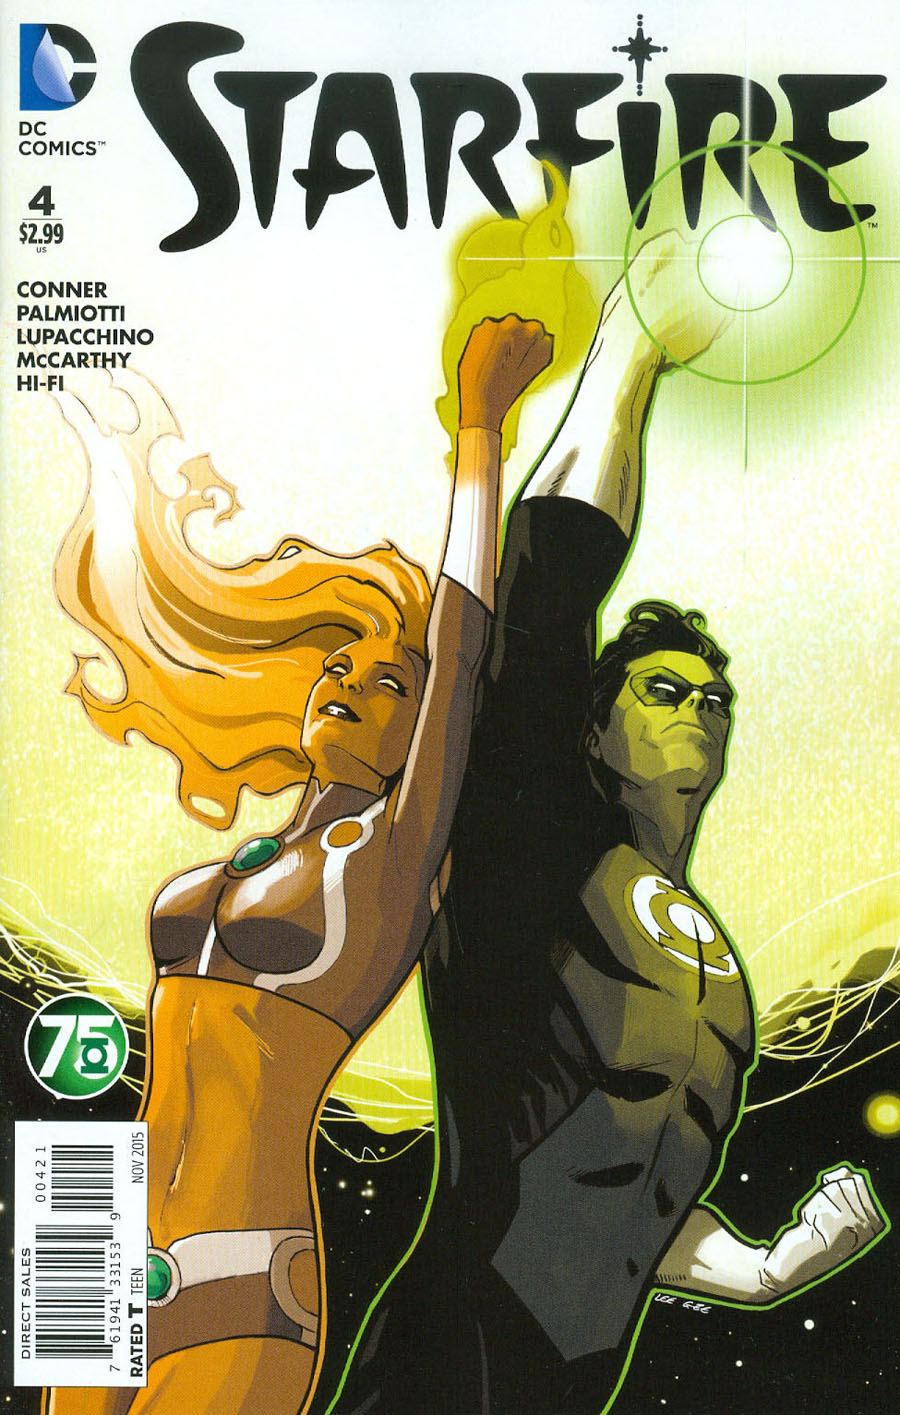 Starfire Vol 2 #4 Cover B Variant Lee Garbett Green Lantern 75th Anniversary Cover